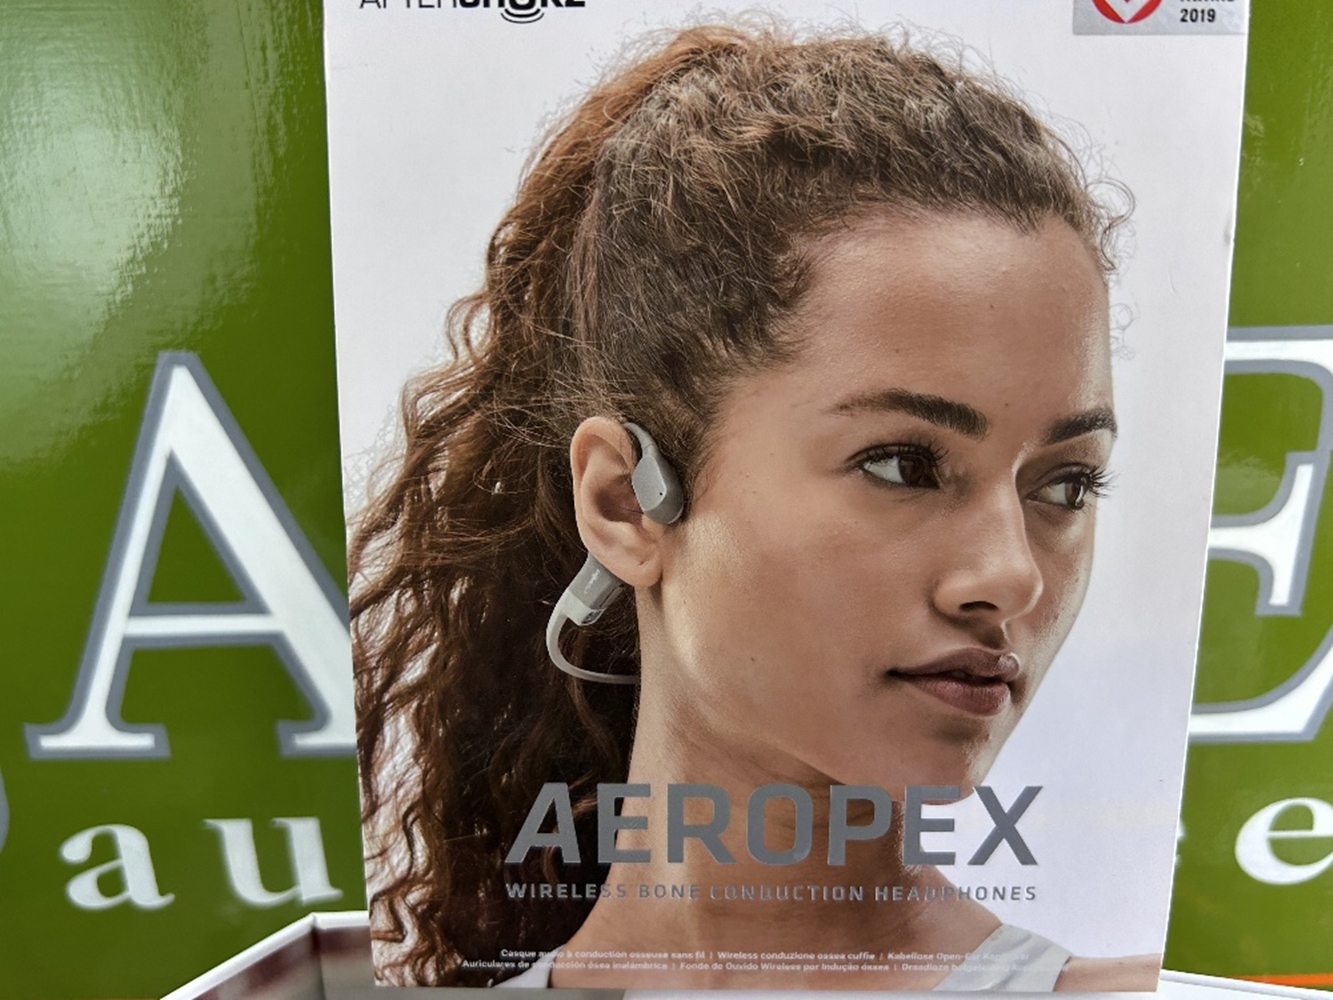 Aeropex Professional Sports Ear Phones Rrp £129 - Image 4 of 7